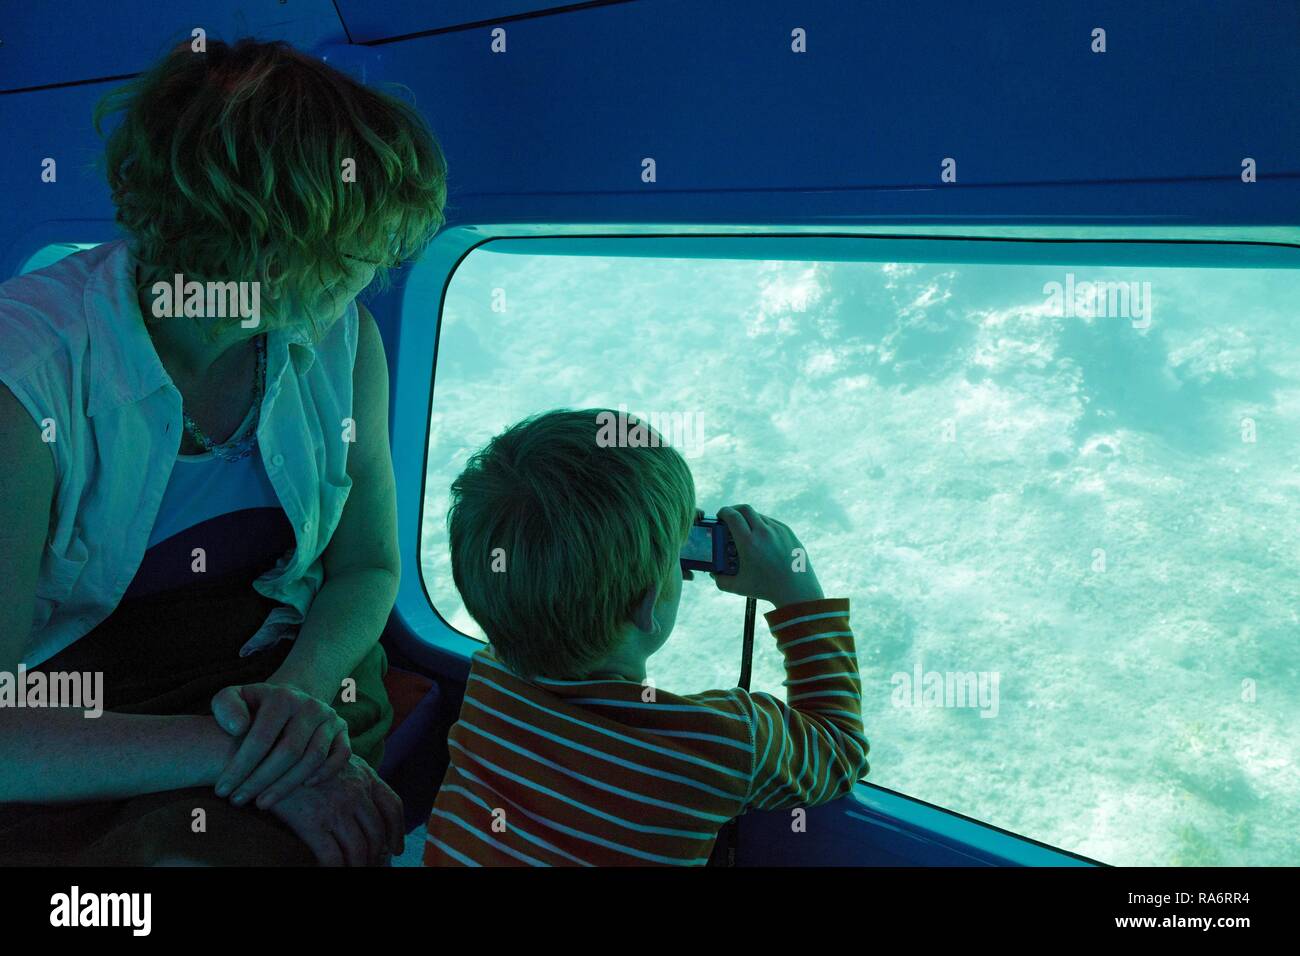 Frau und Junge reist in einer Semi-U-Boot, Rab, Rab Primorje-Gorski Kotar, Kroatien Stockfoto